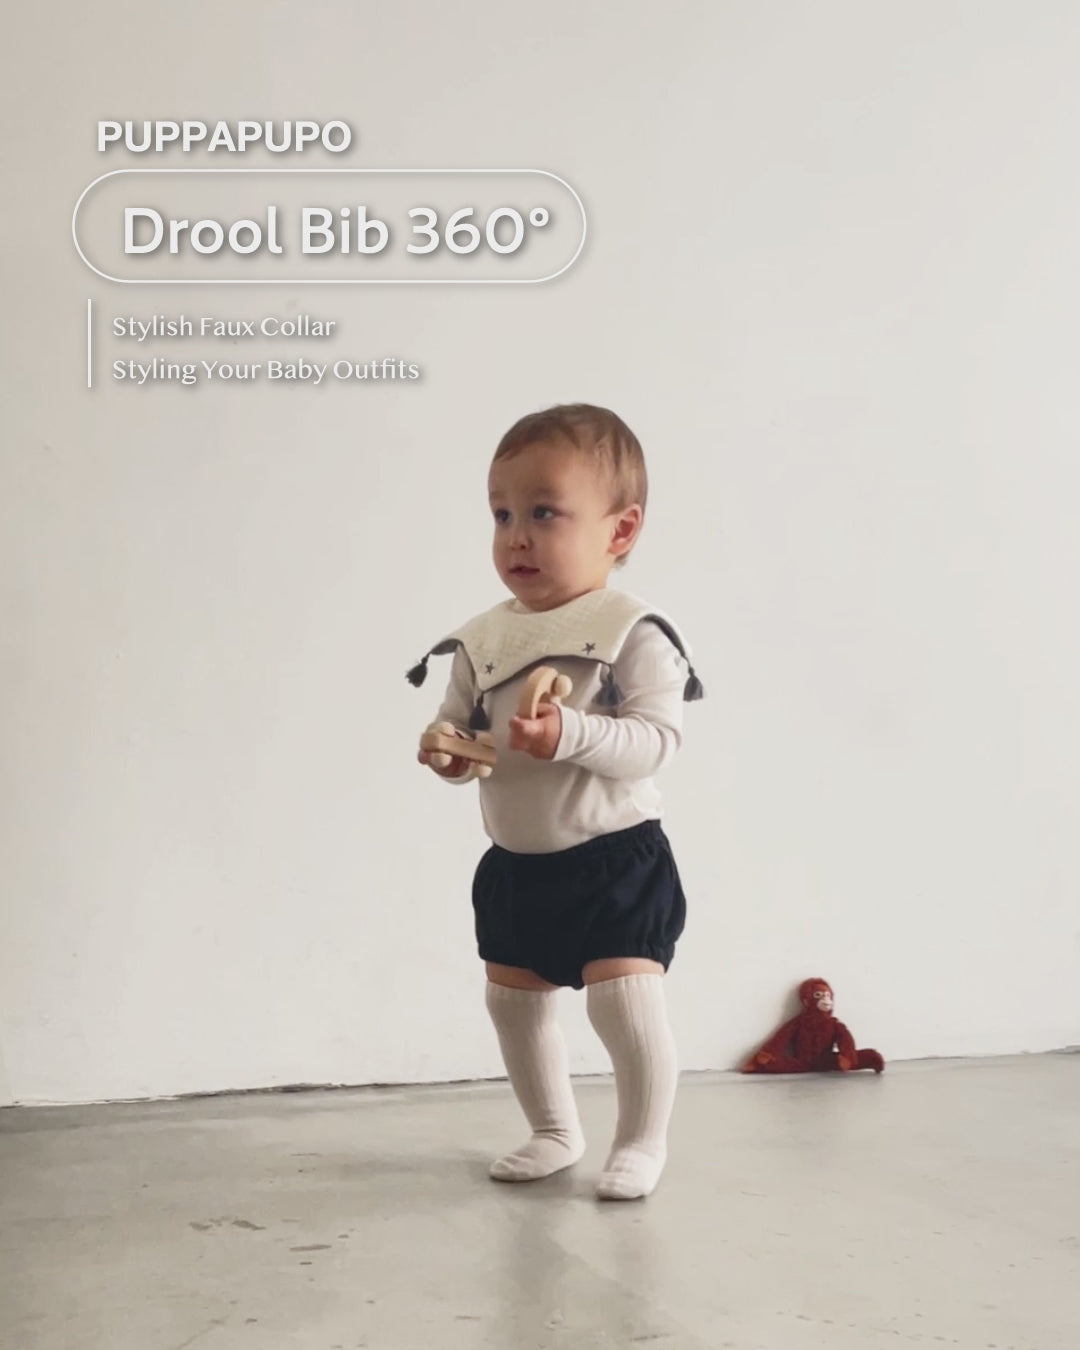 Drool Bib 360°